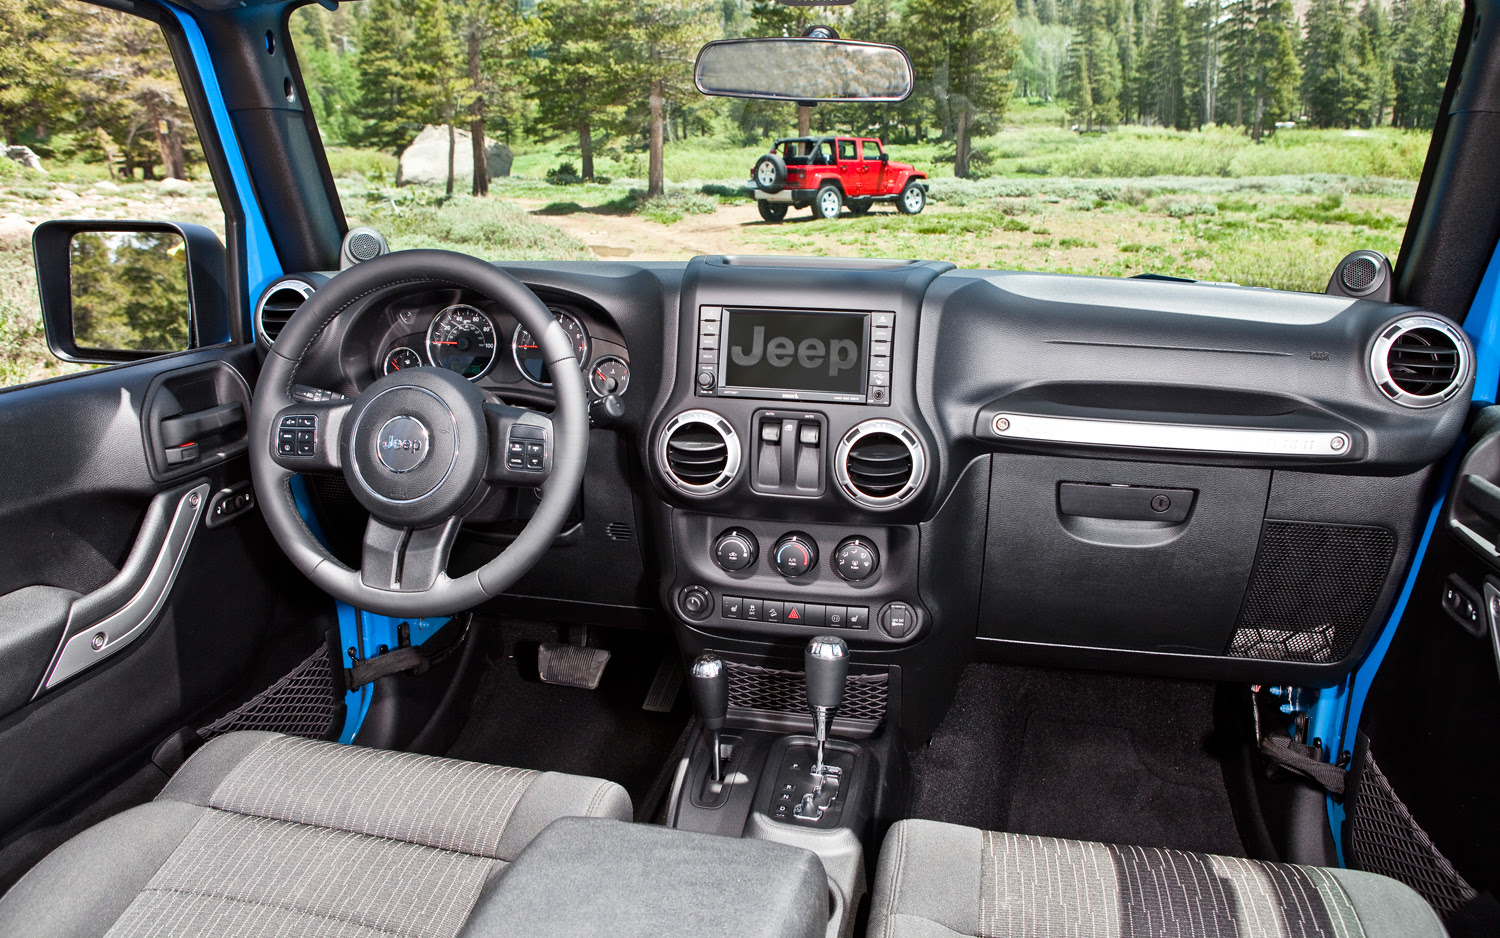 Jeep Wrangler Dash Upgrade